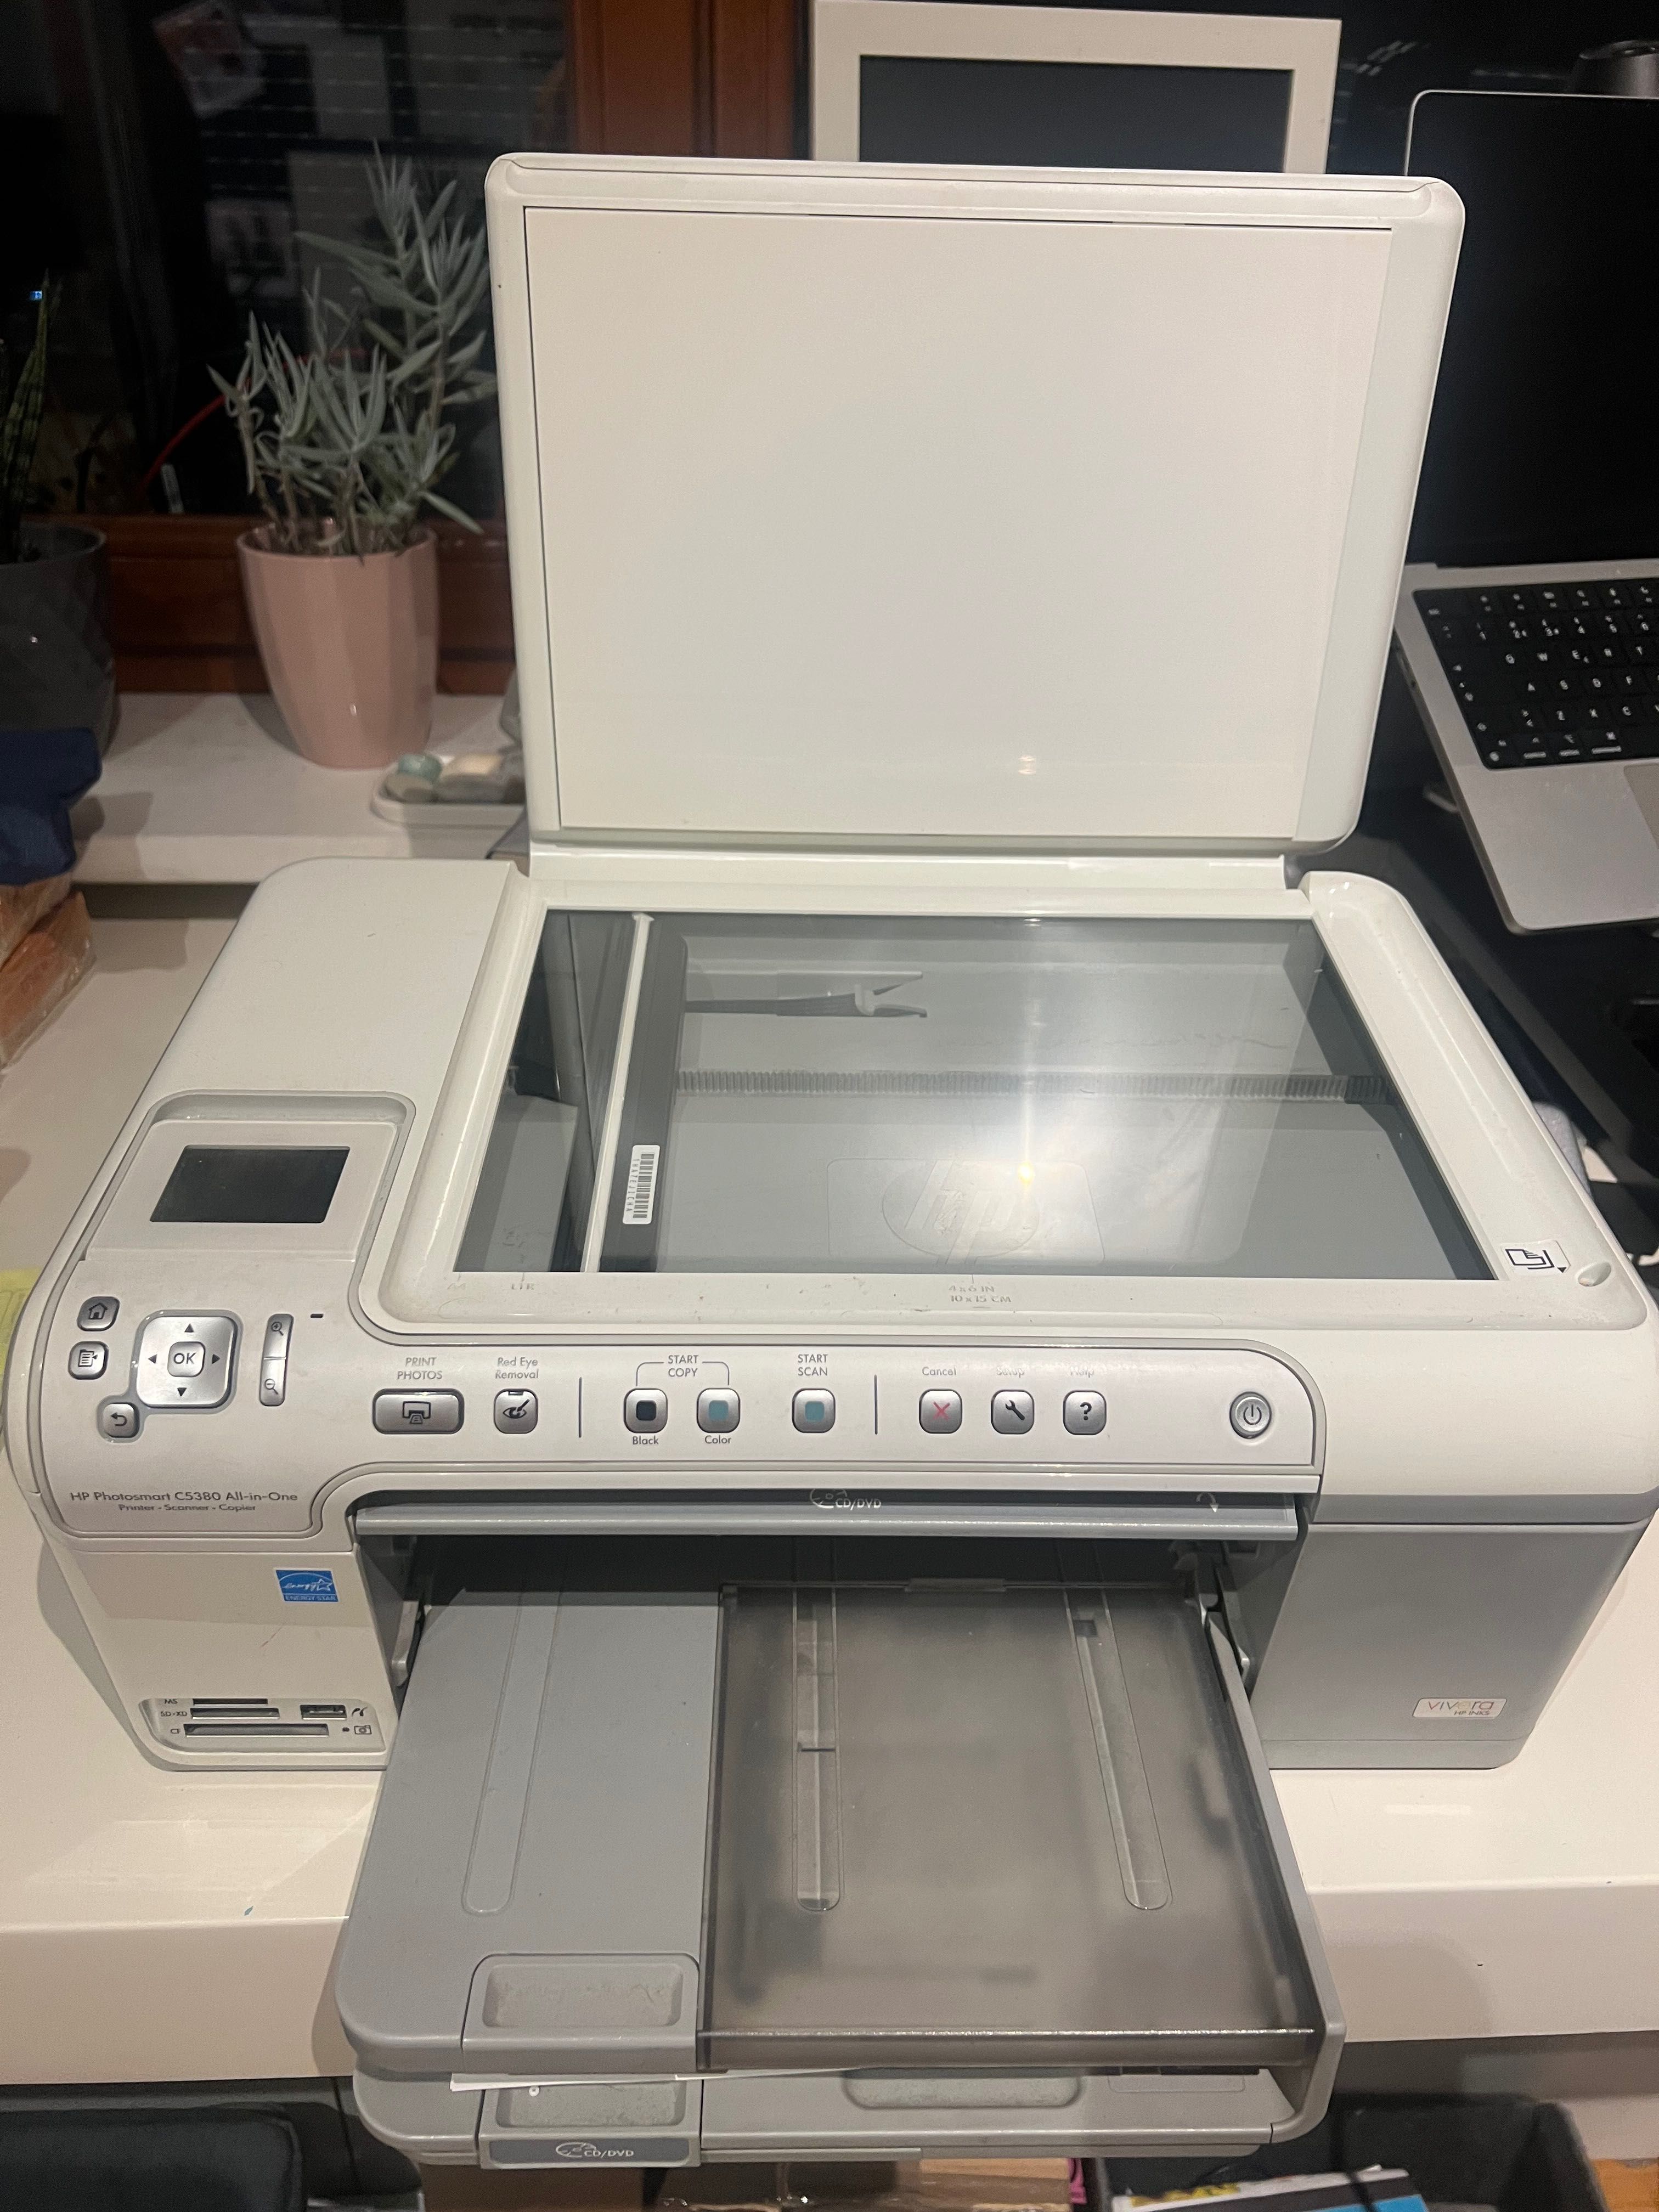 HP Photosmart C5380- drukarka/skaner/kopiarka